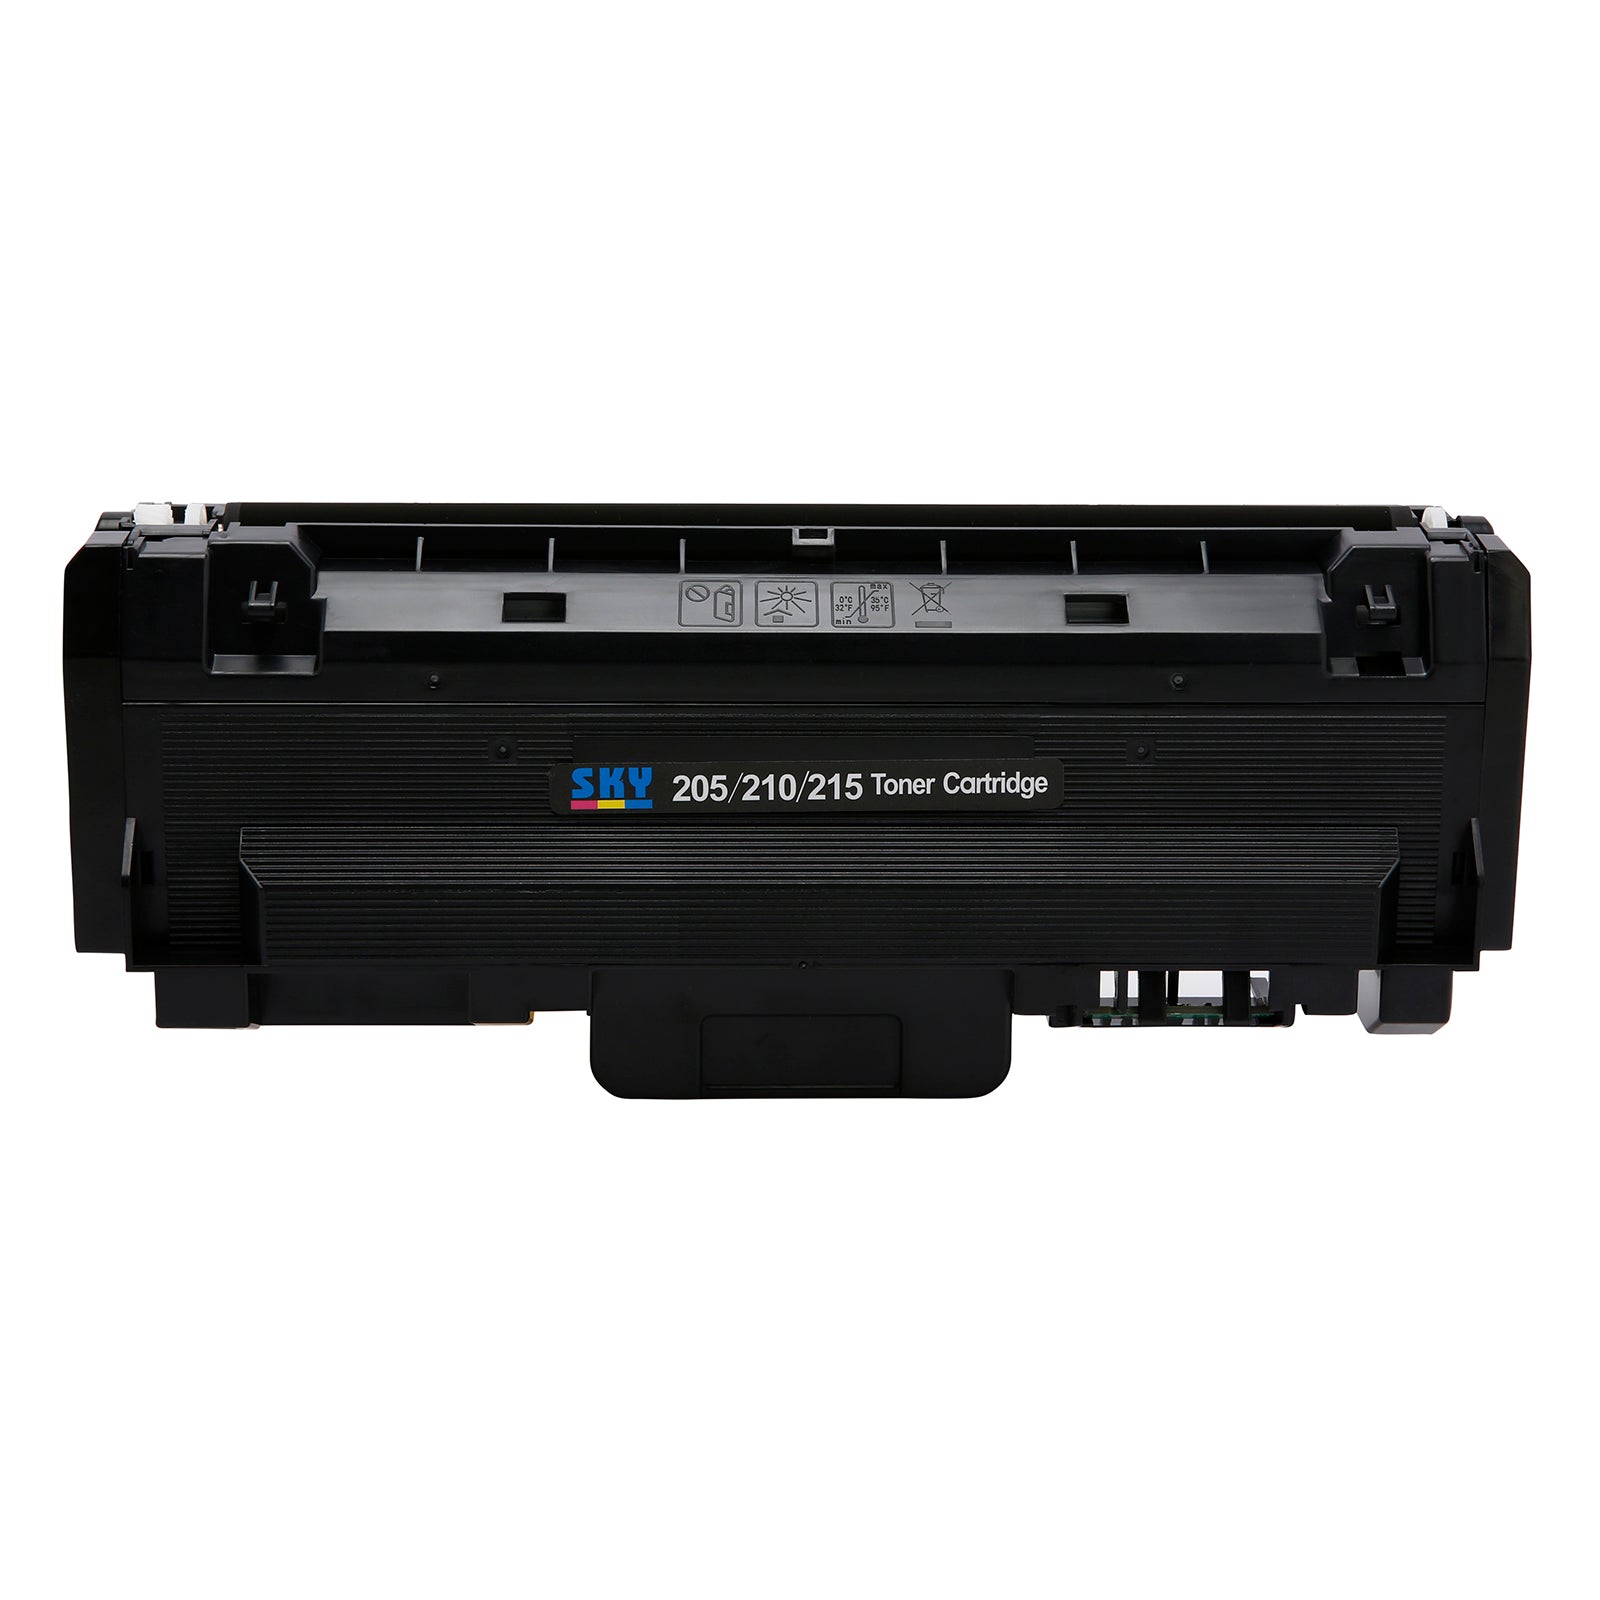 SKY  Toner Cartridge for Xerox Multifunction Printer B205  B210  and B215